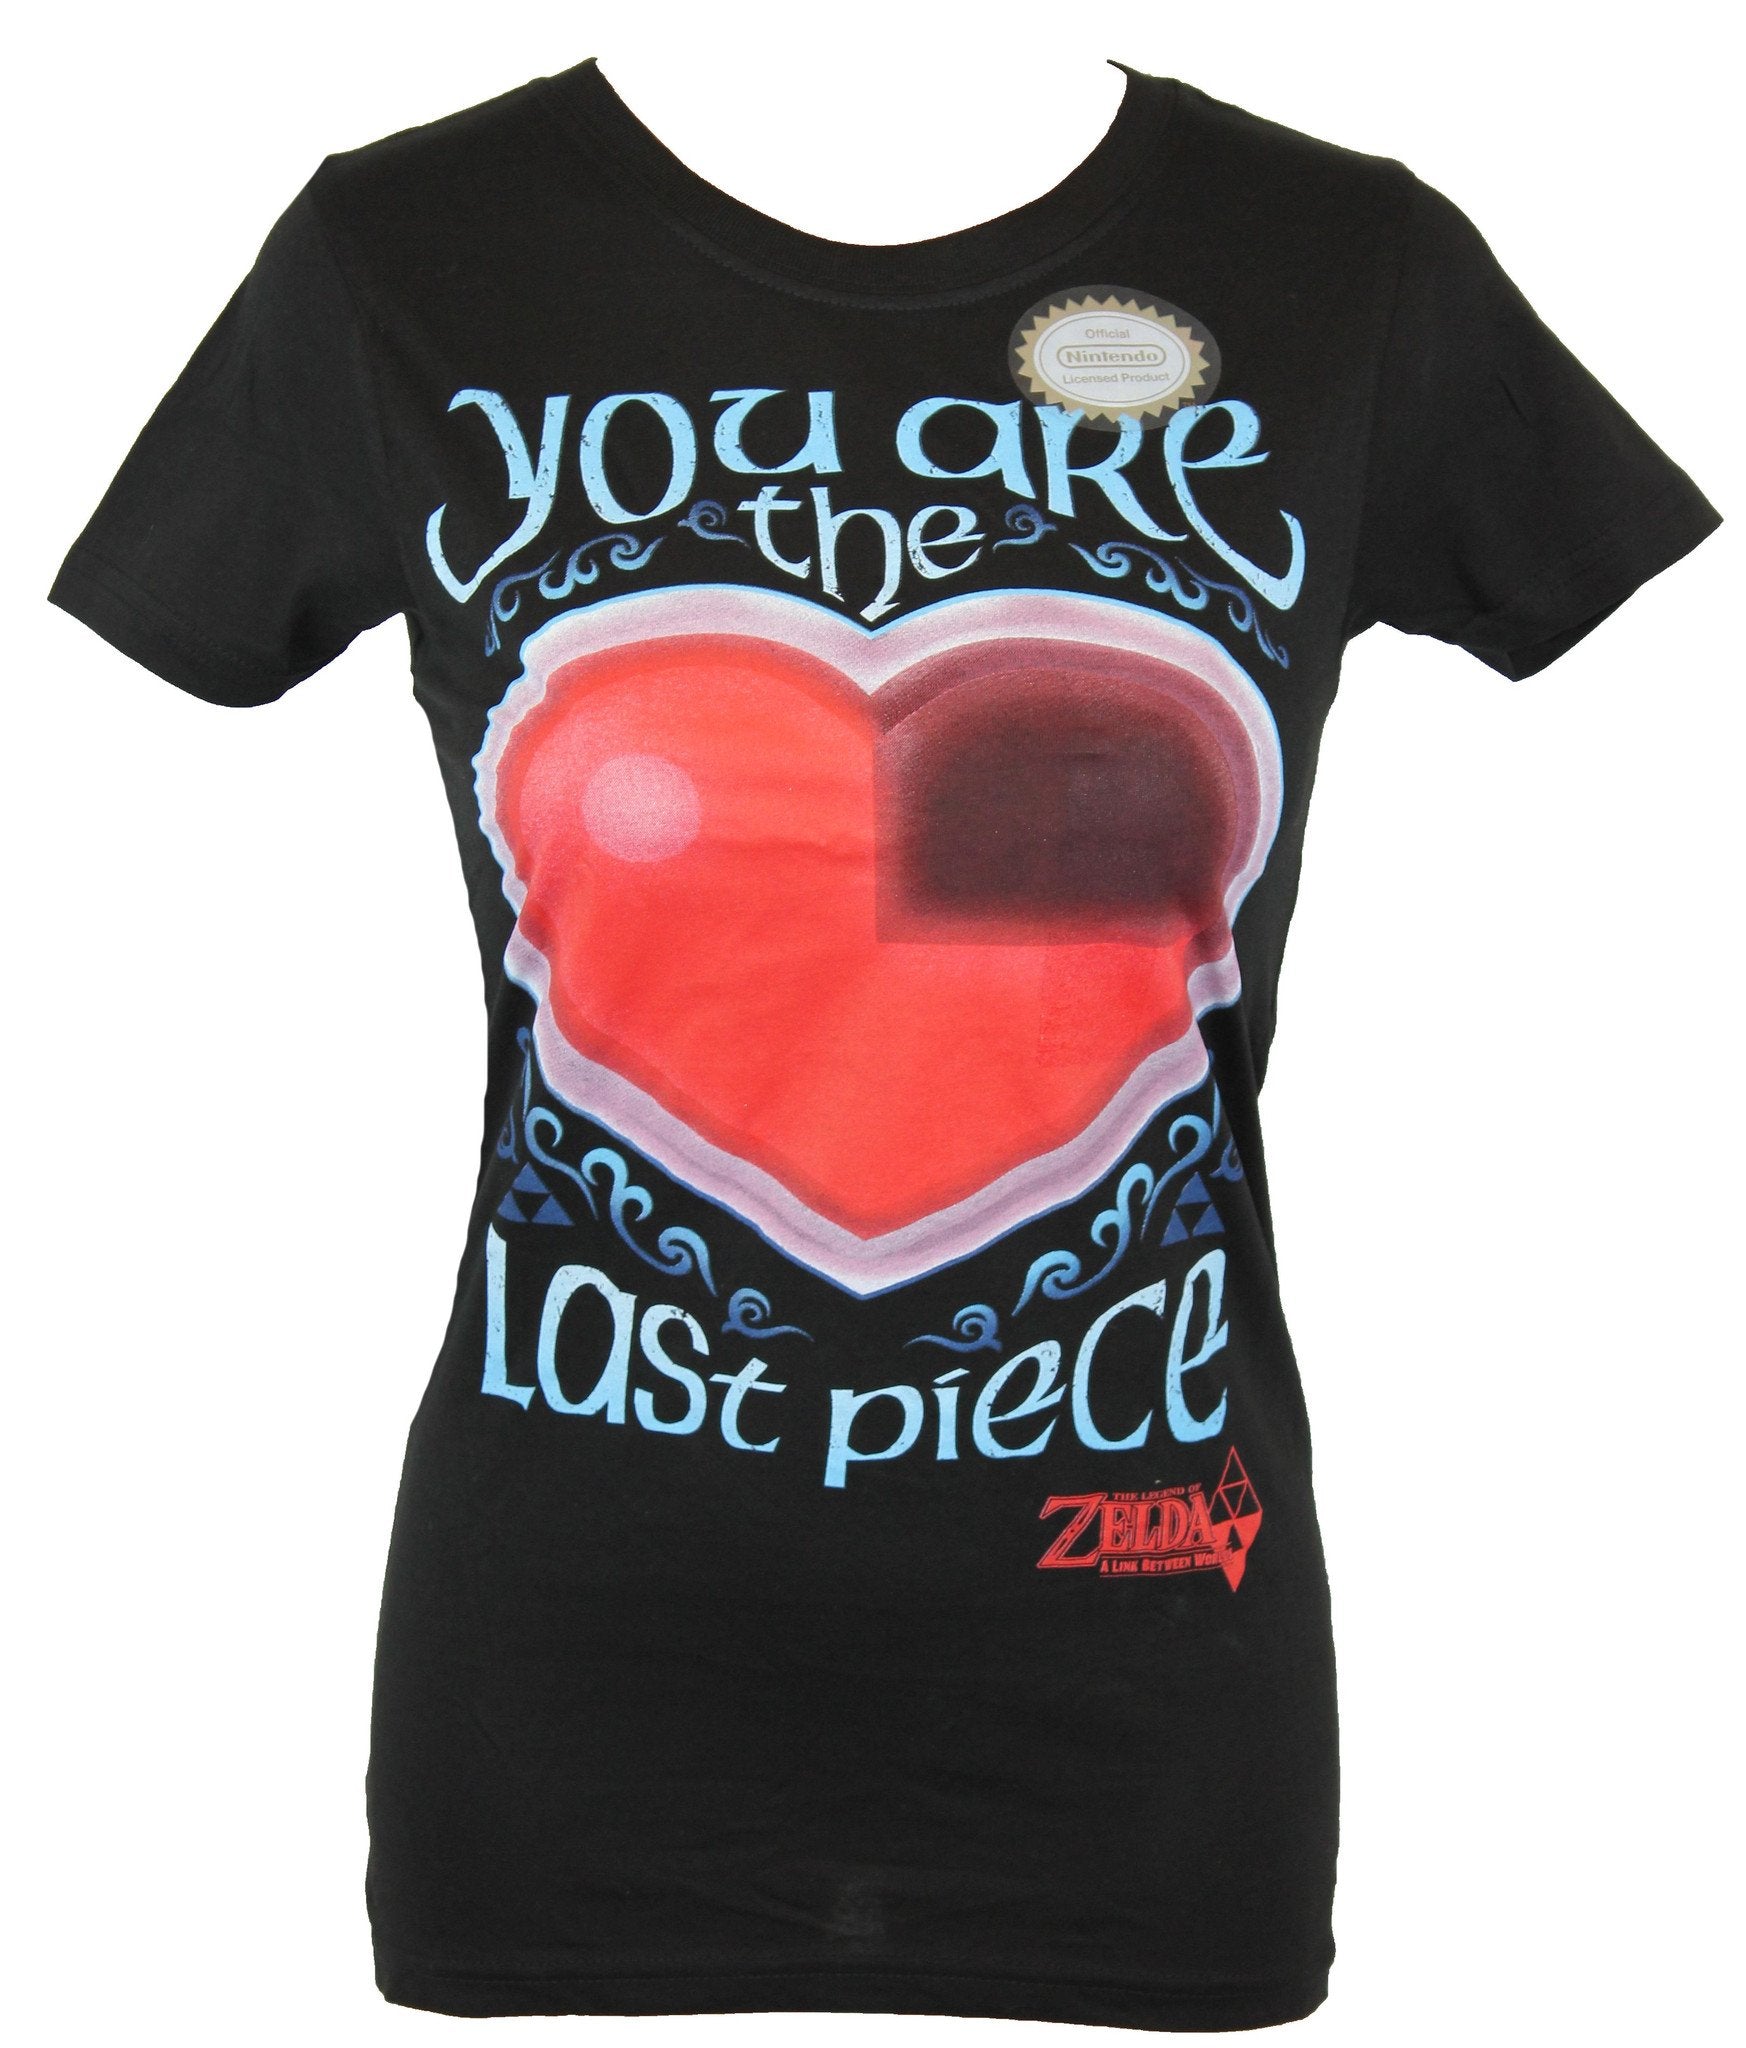 Legend of Zelda Girls Juniors T-Shirt - "You are the Last Piece" Heart Image